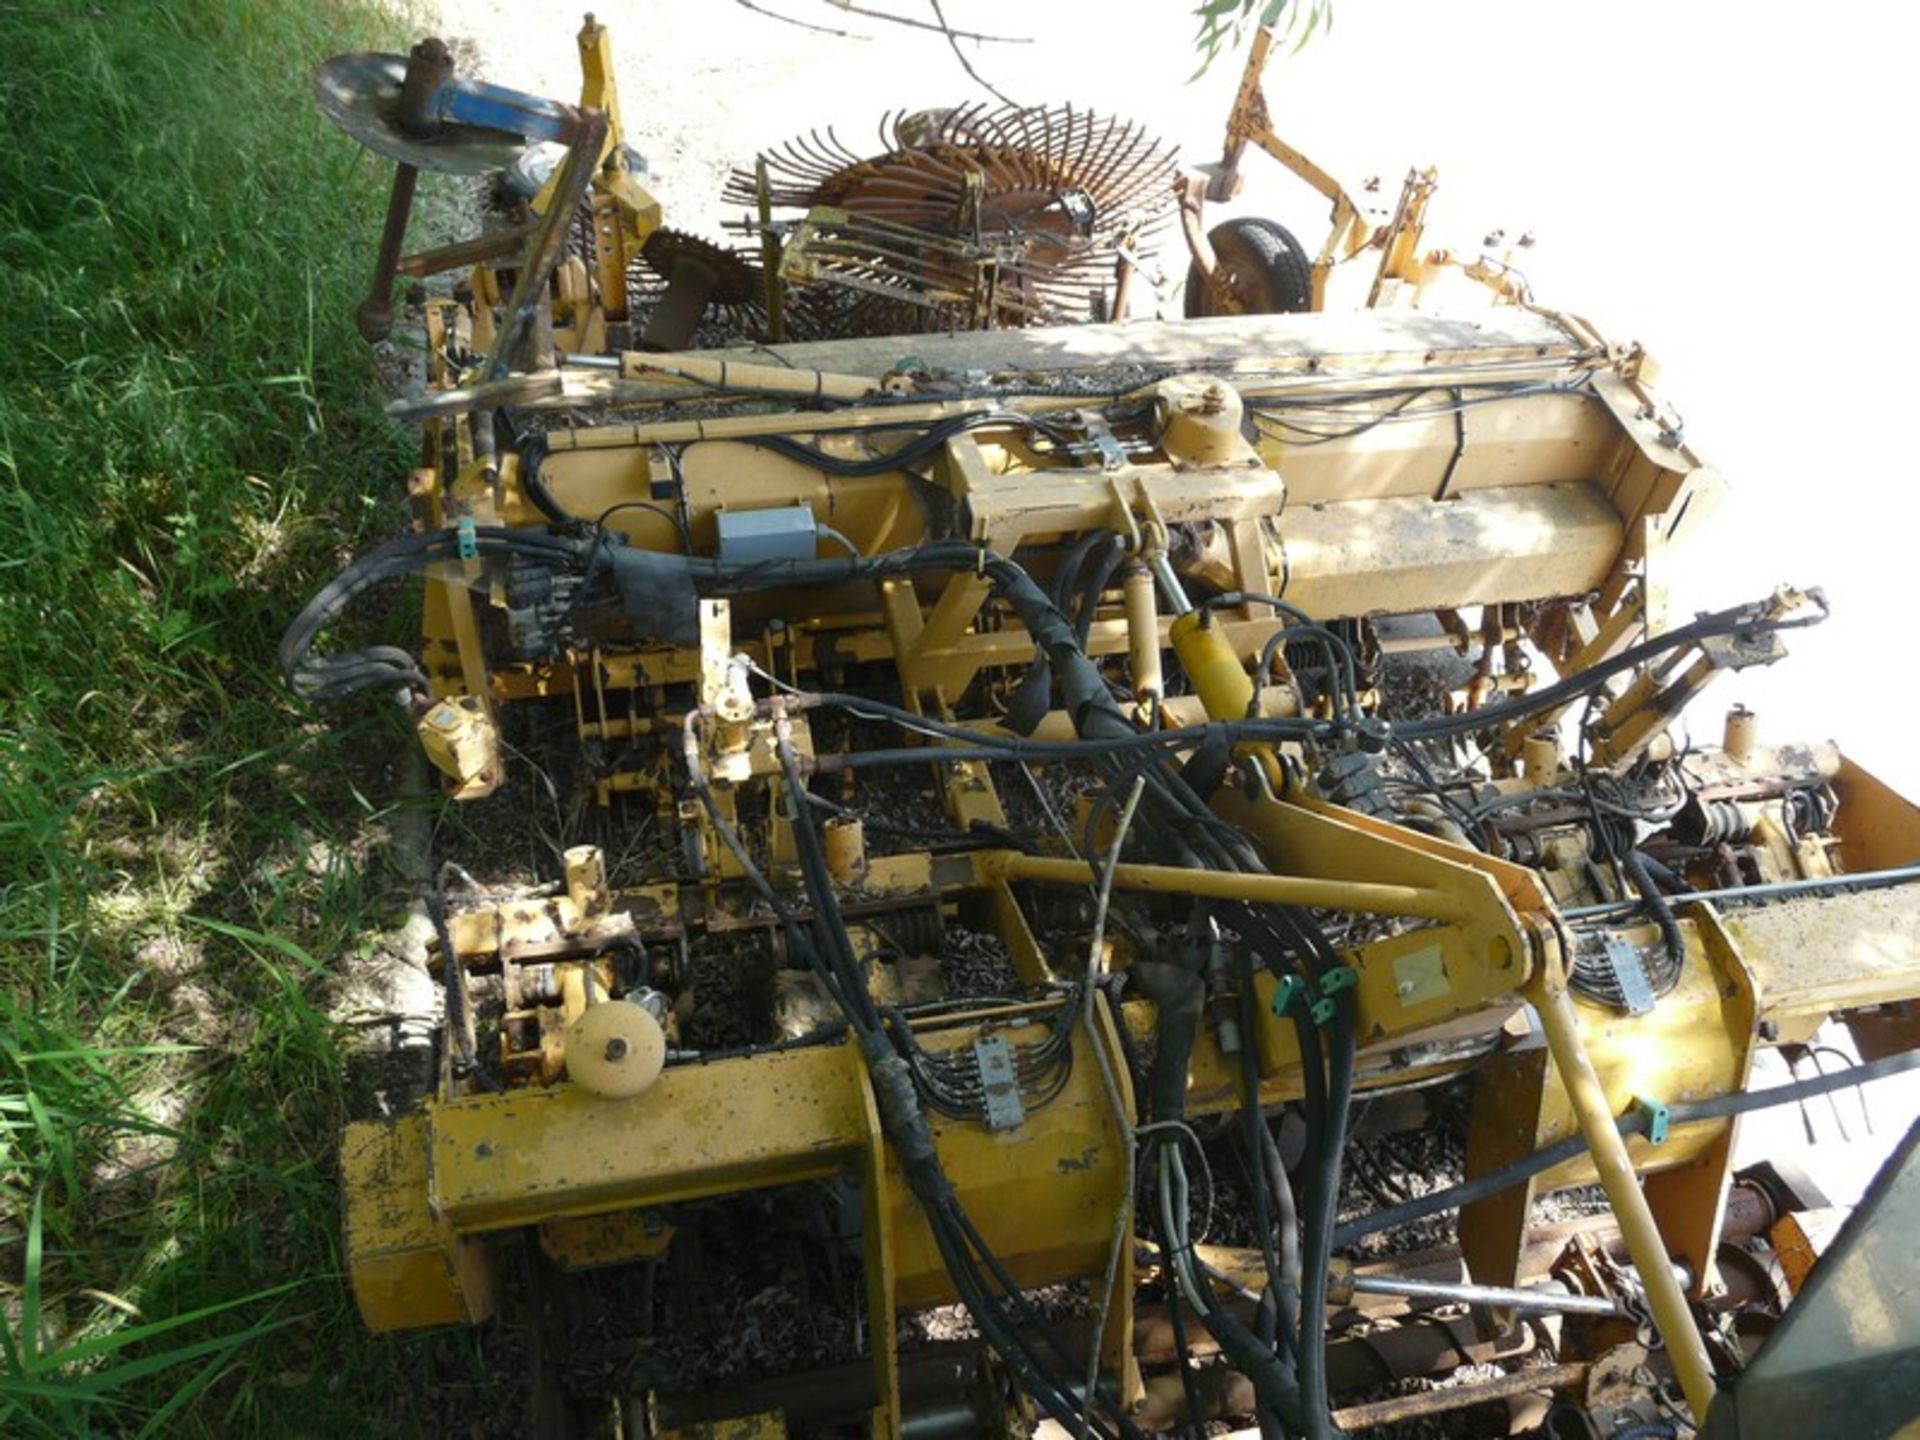 Sugar Beet harvester KLEINE SF-10, 6 ROW , REG XANTHI 54392, 4886Hours (Located in Greece - Plati - Image 14 of 15